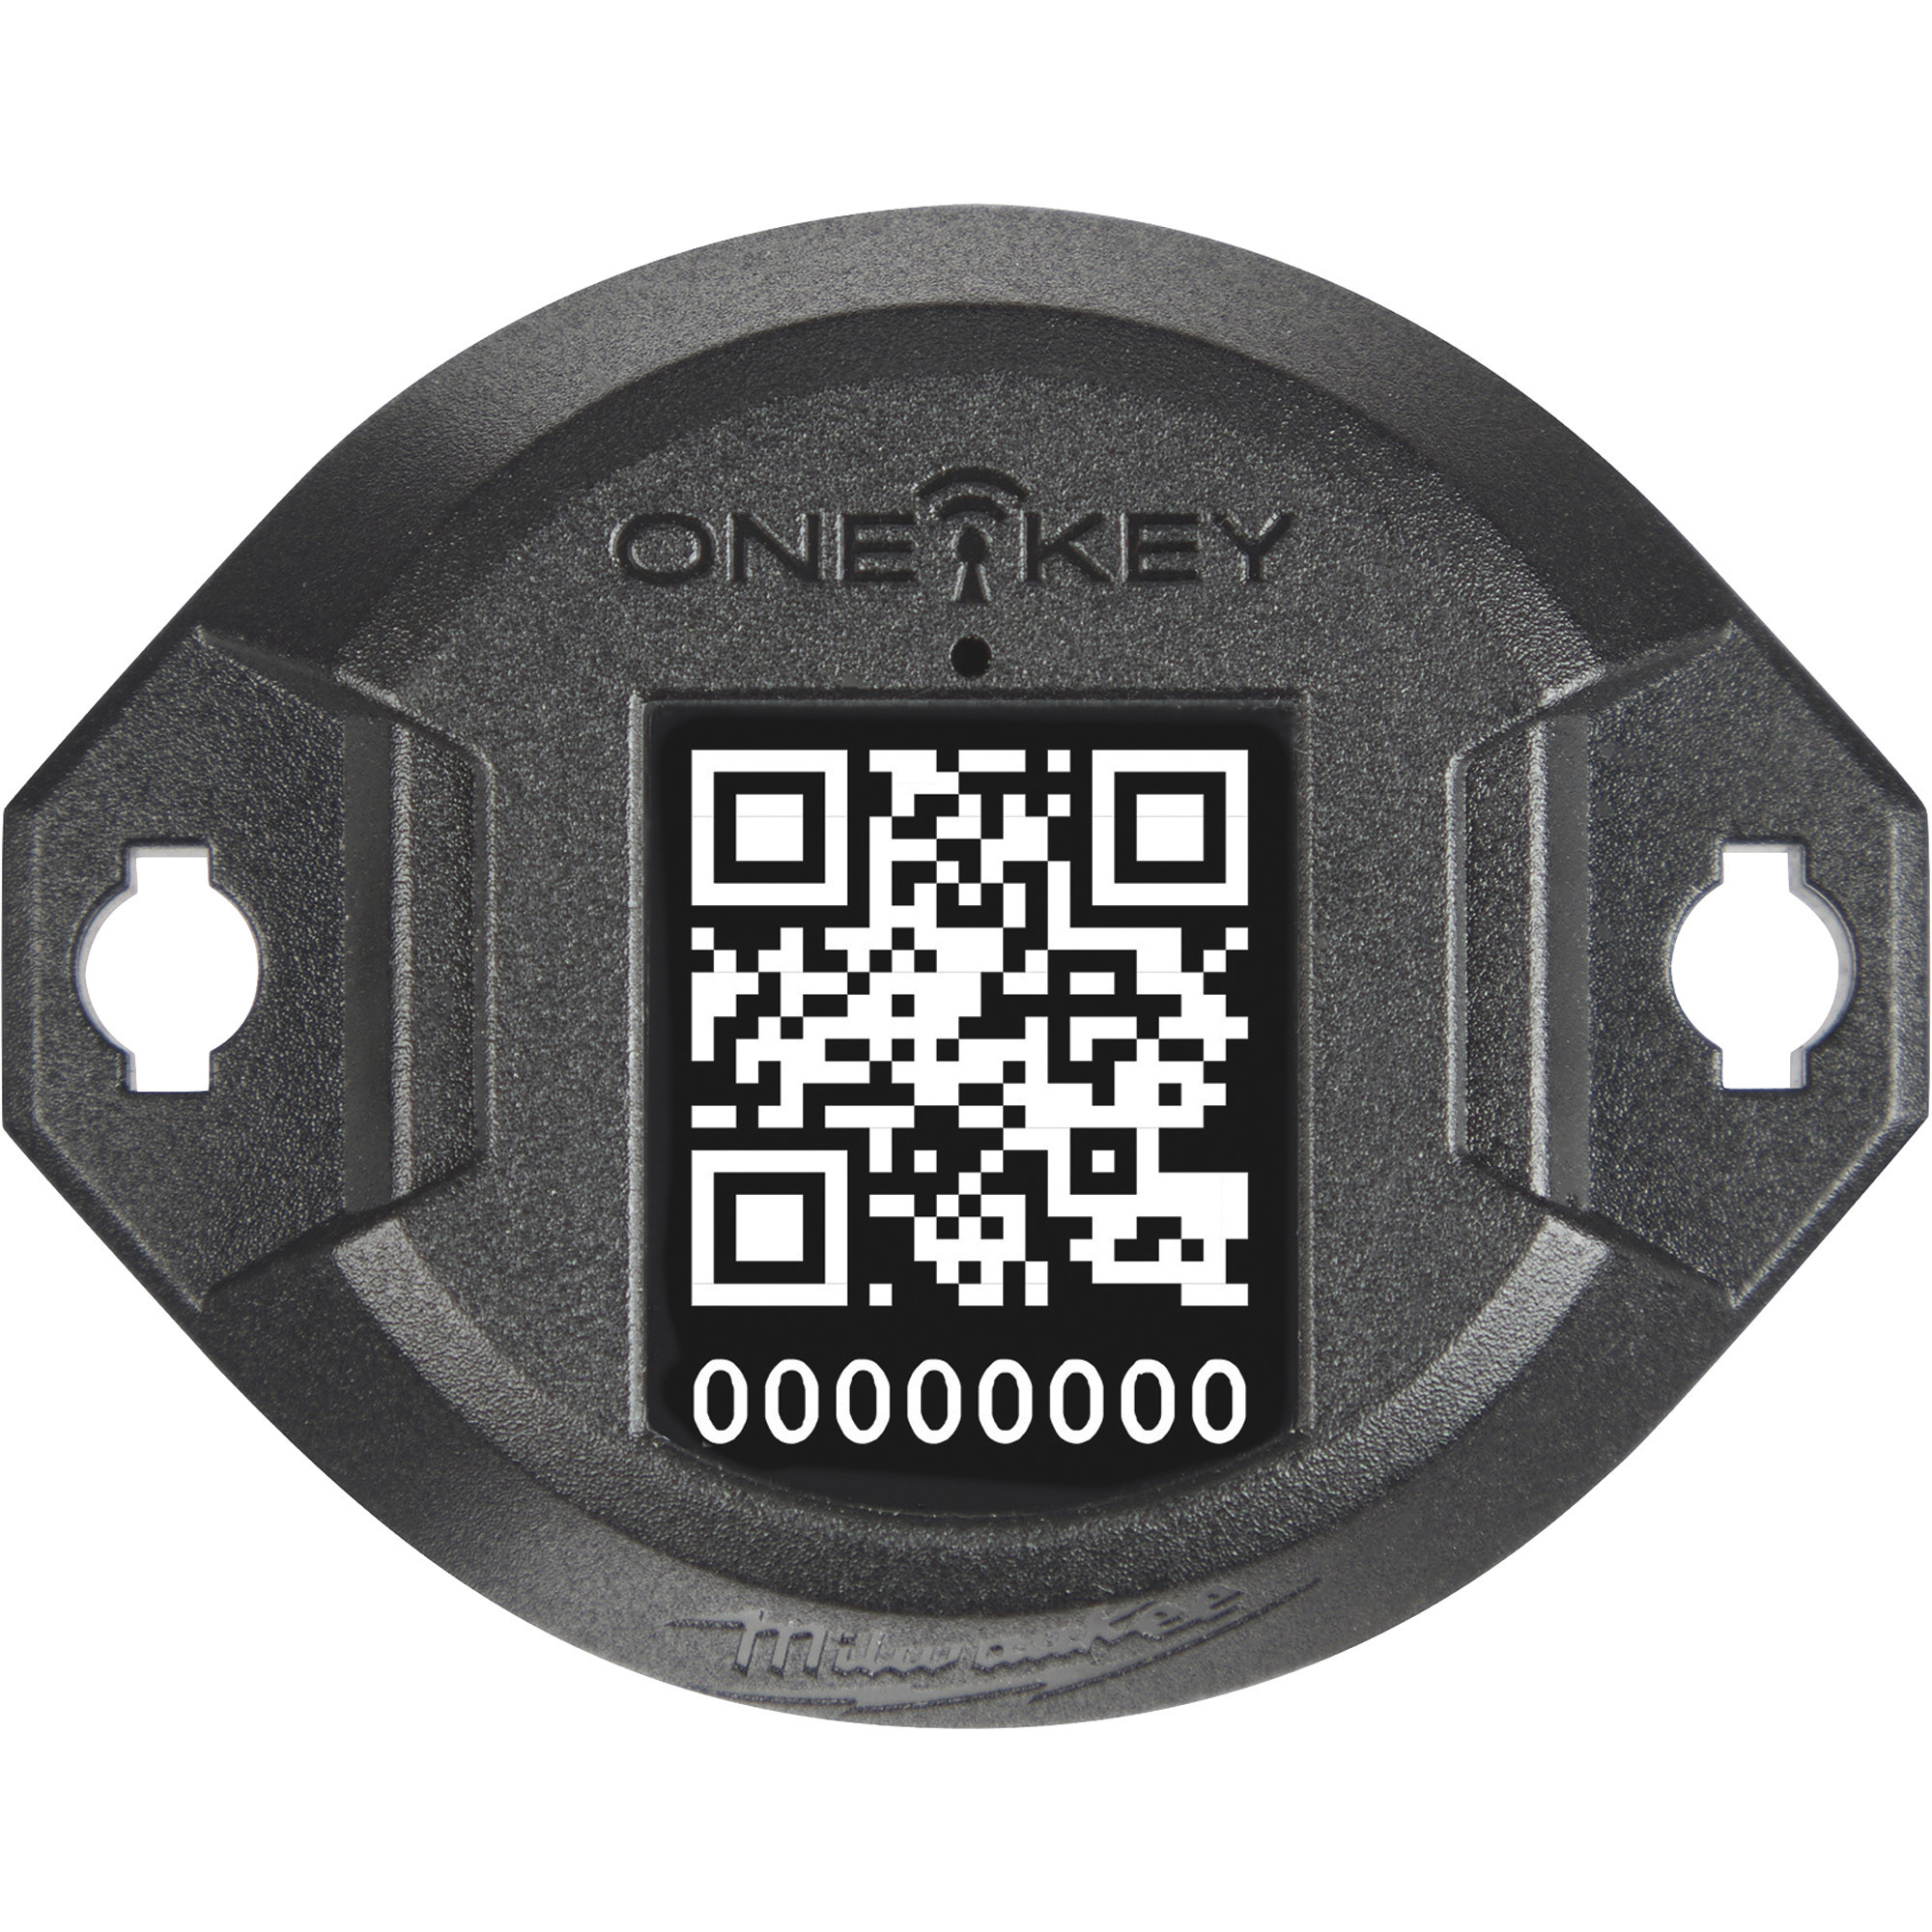 Milwaukee One-Key Bluetooth Tracking Tag, Model 48-21-2301